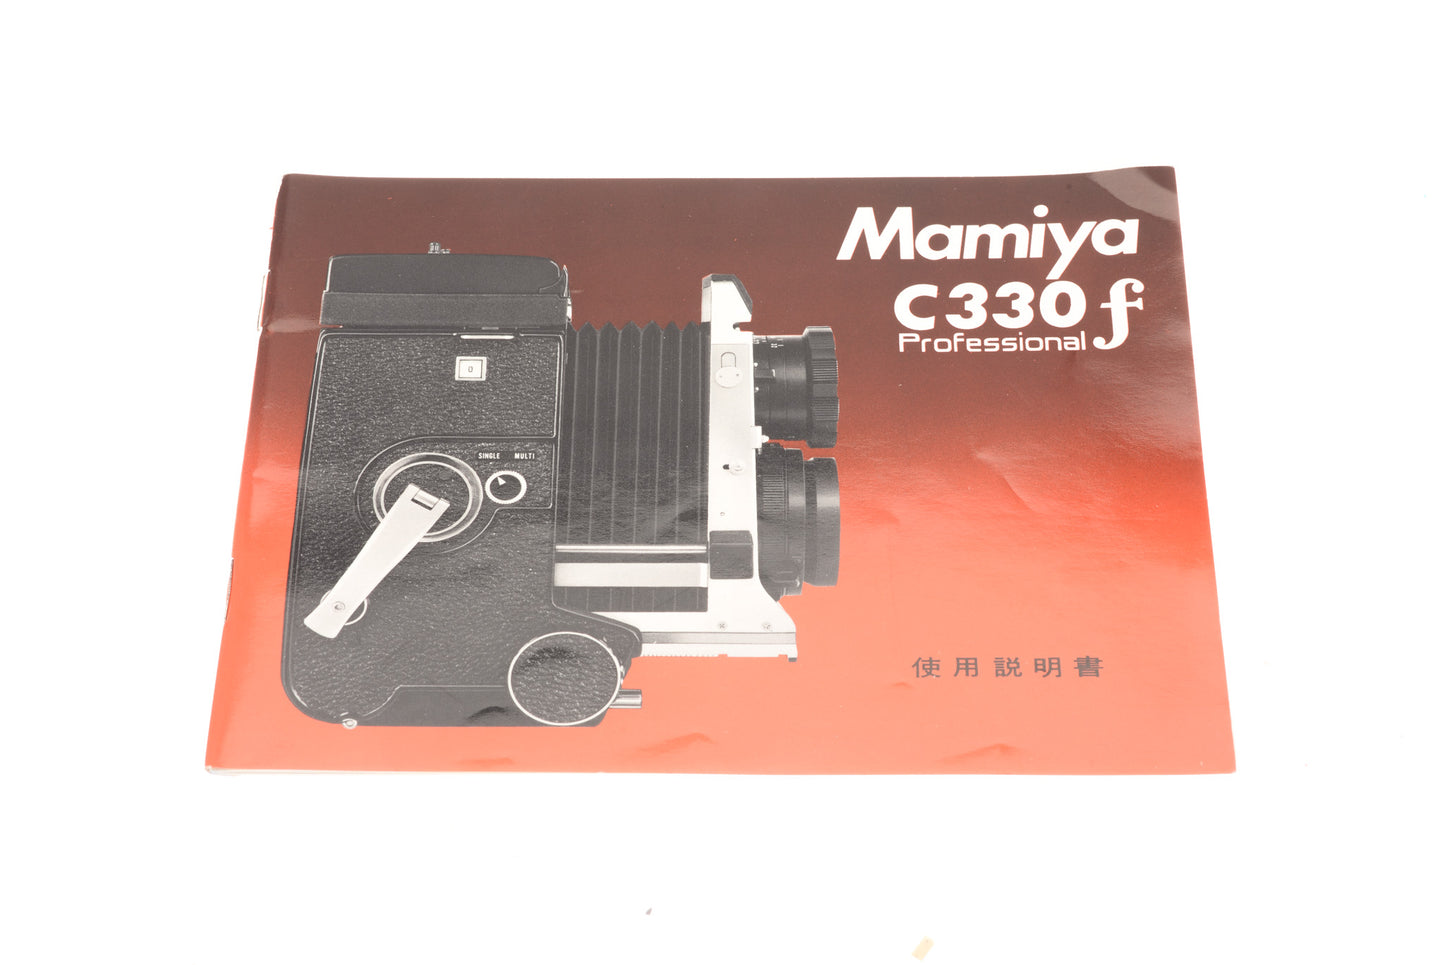 Mamiya C330f Professional Instructions - Accessory